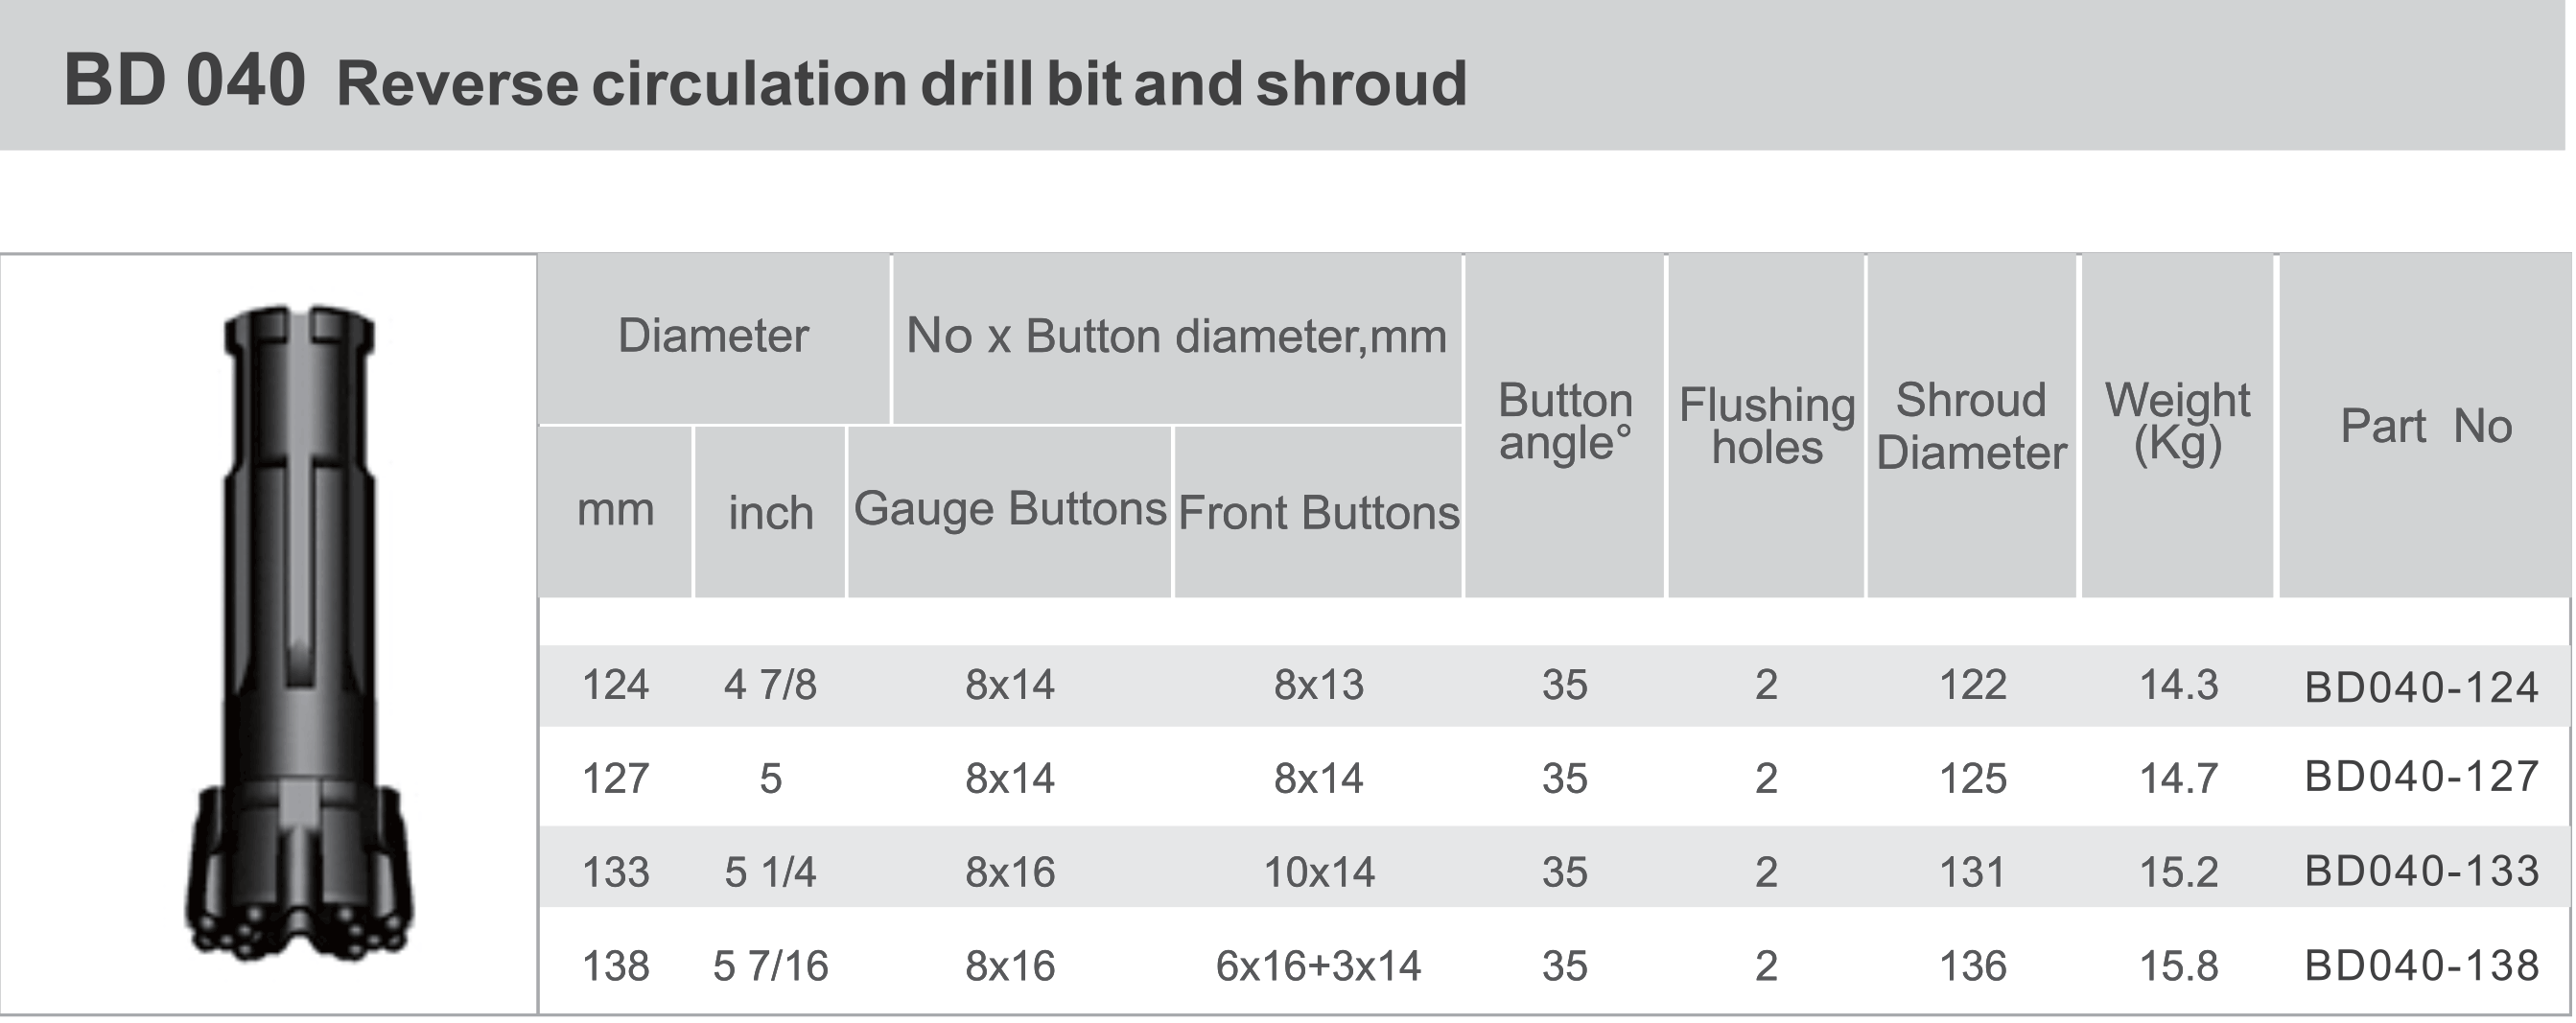 Black Diamond Drilling BD040 RC Reverse Circulation Drill Bit Shroud technical data